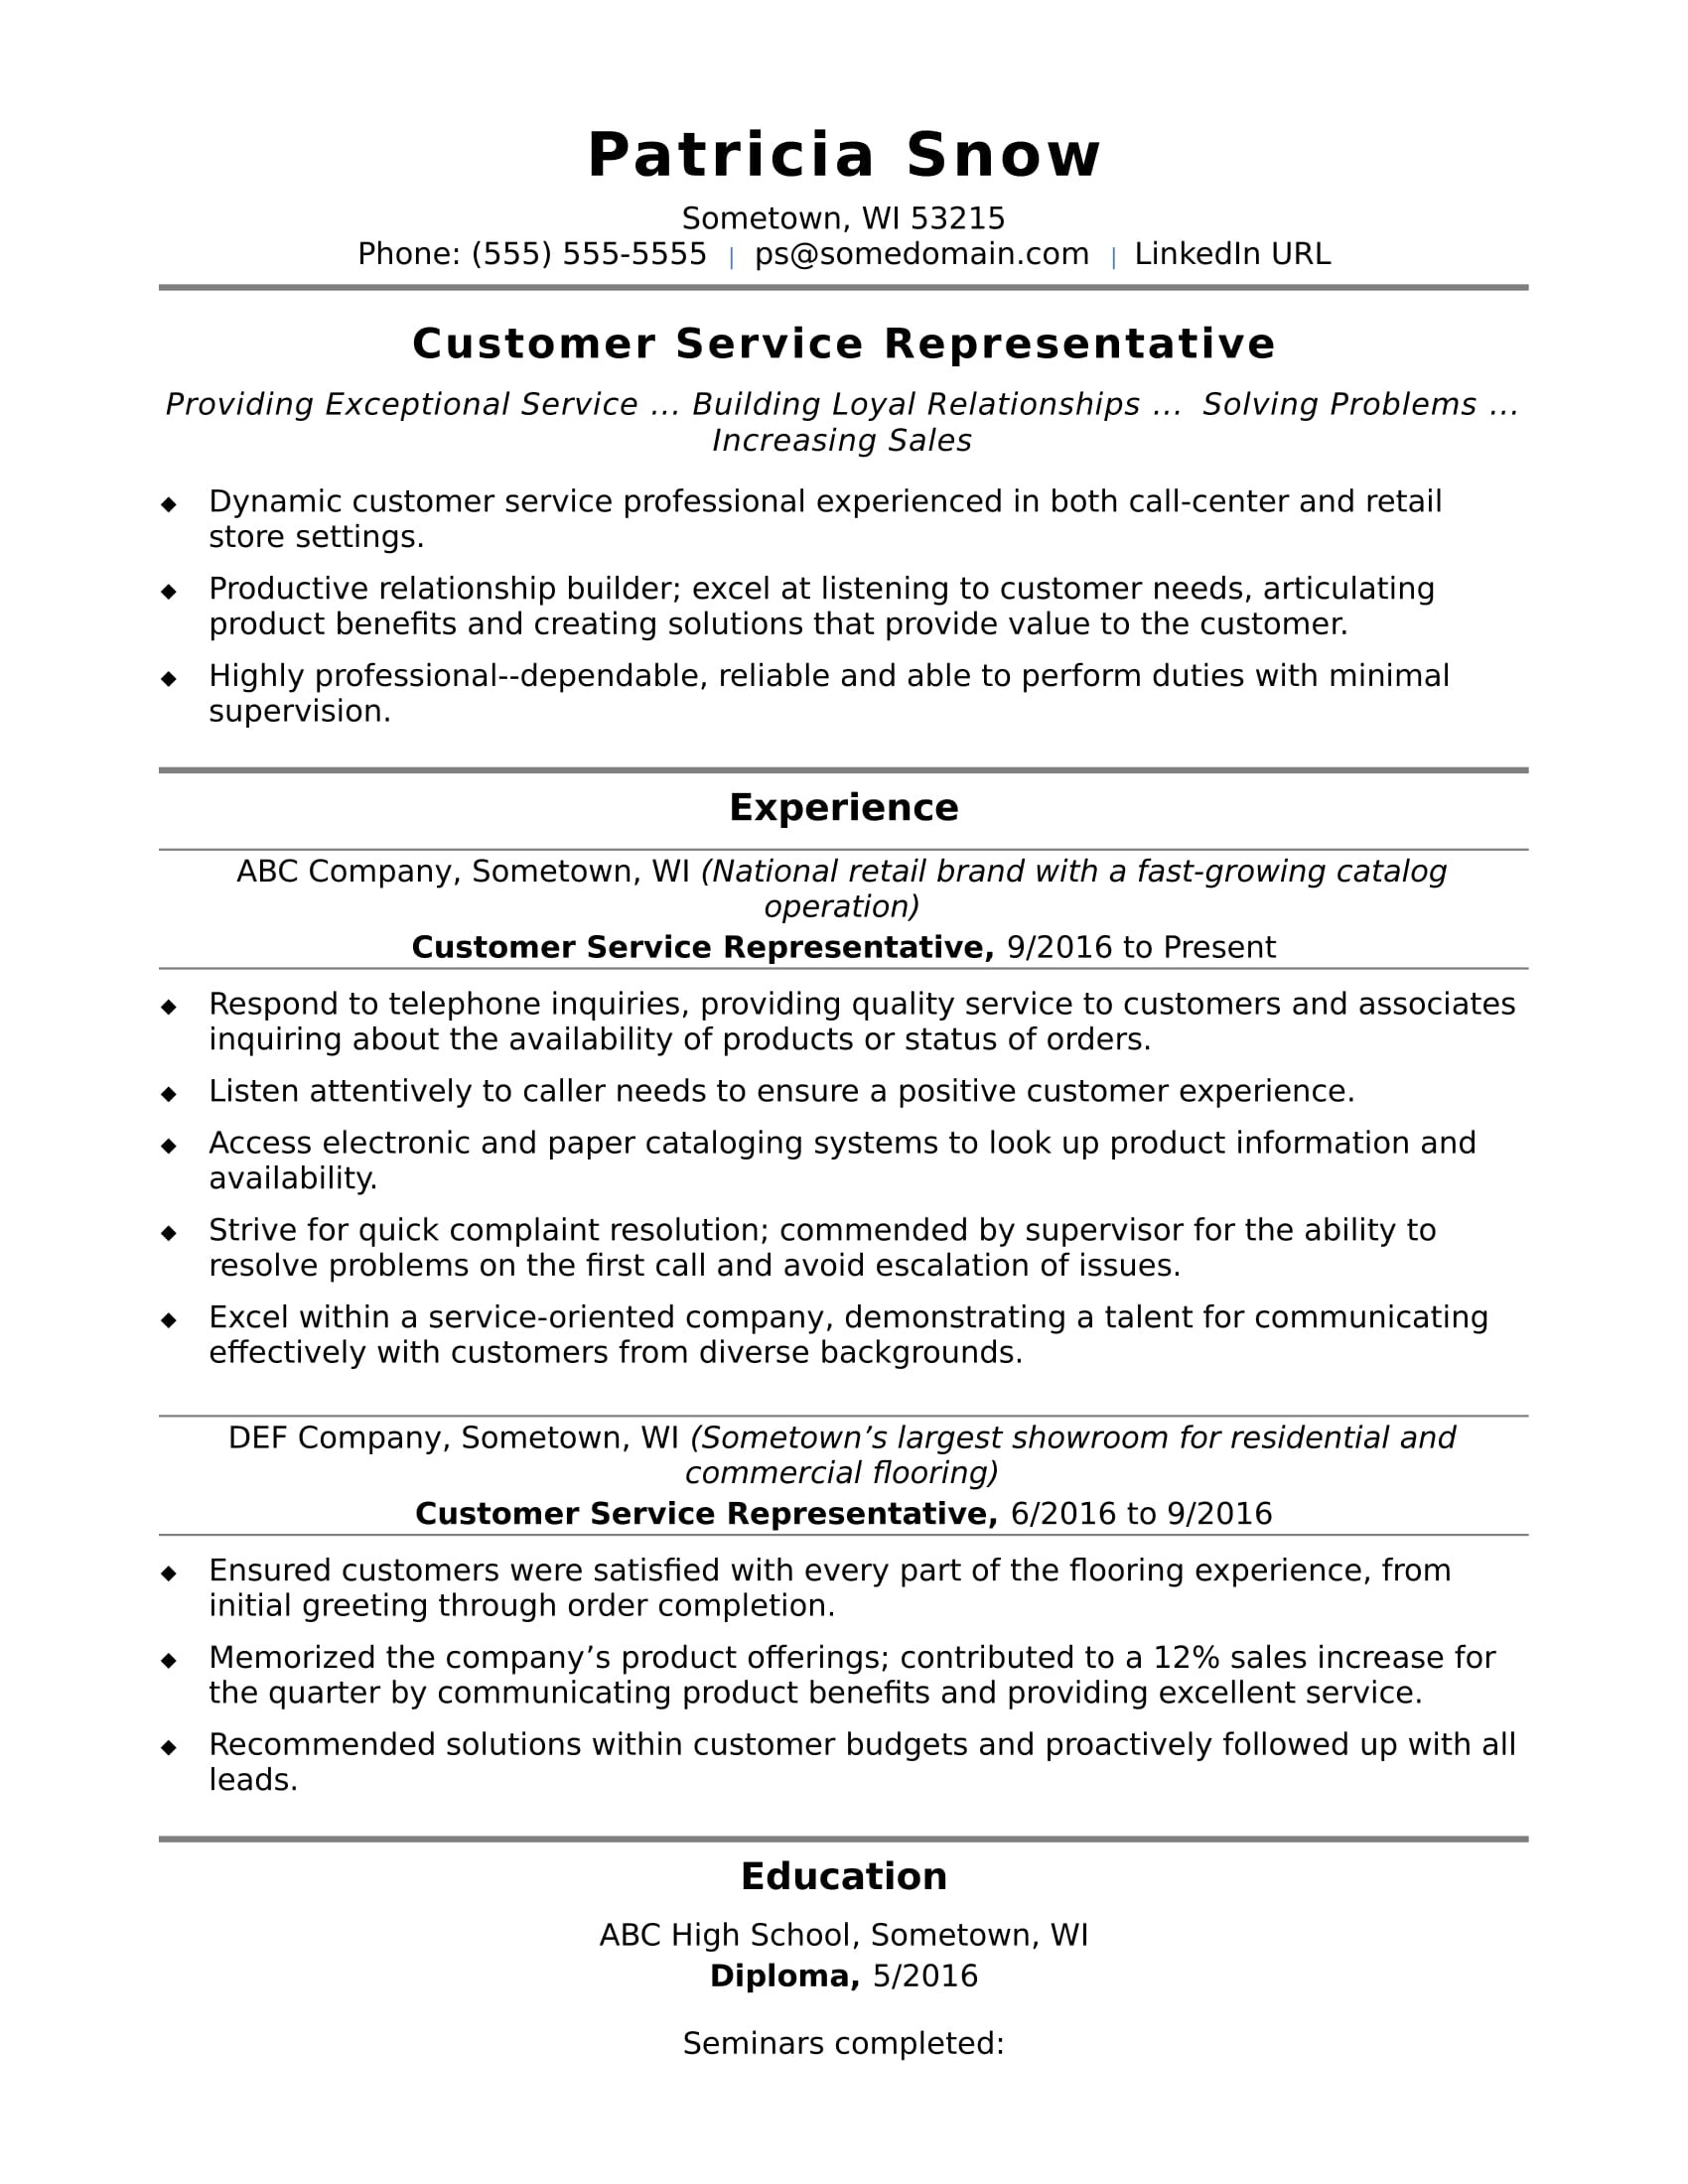 Sample Resume Objectives Customer Service Manager Entry-level Customer Service Resume Sample Monster.com